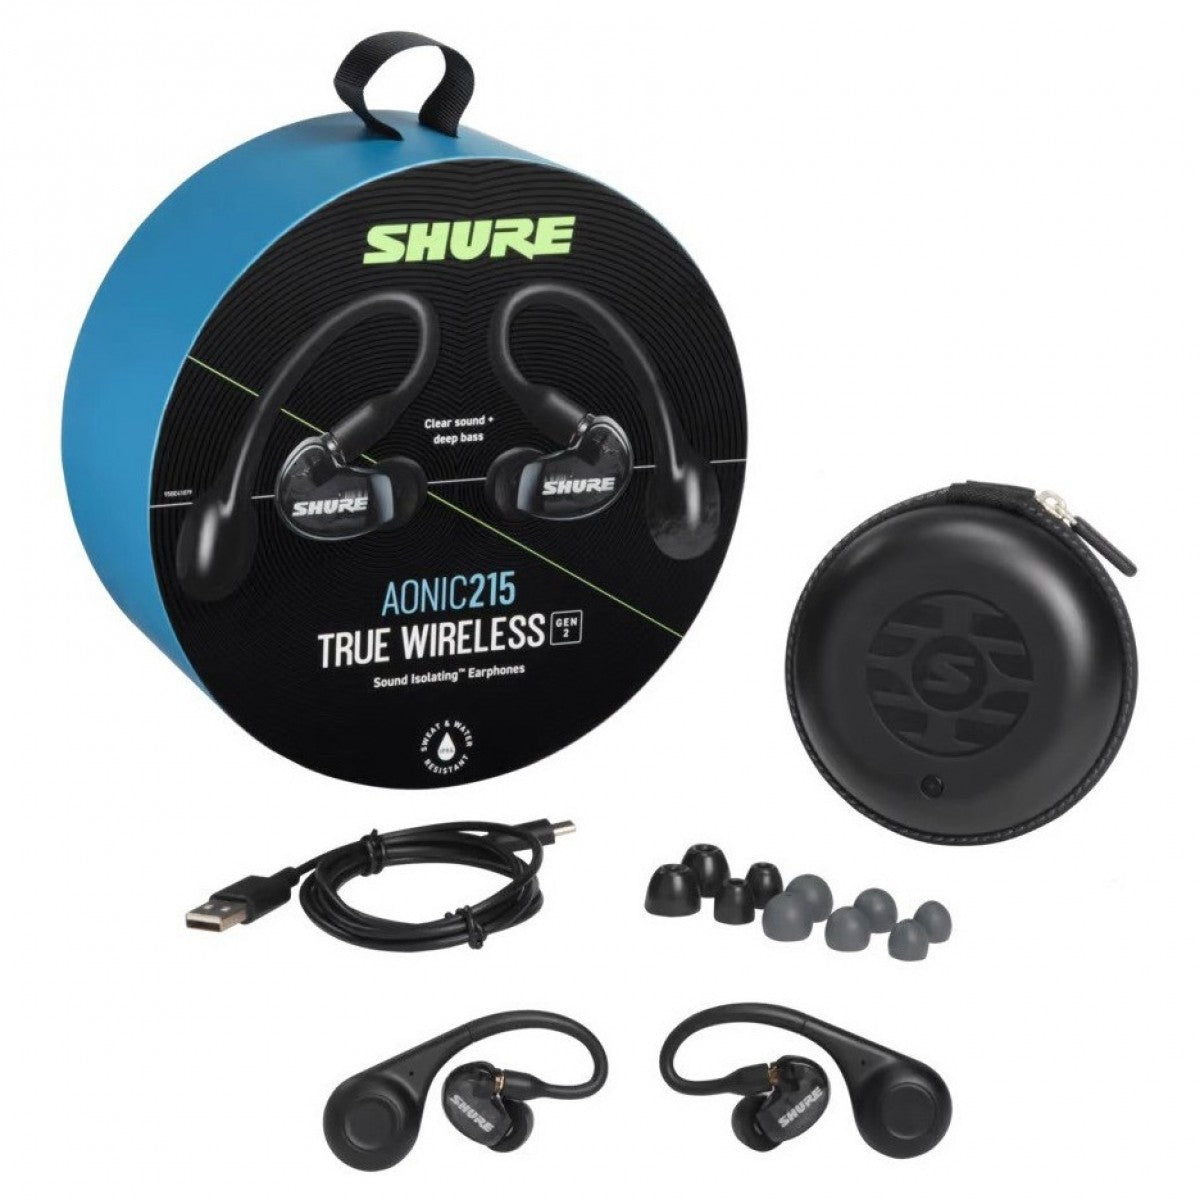 Shure AONIC 215 Gen 2 True Wireless Sound Isolating Earphones Black